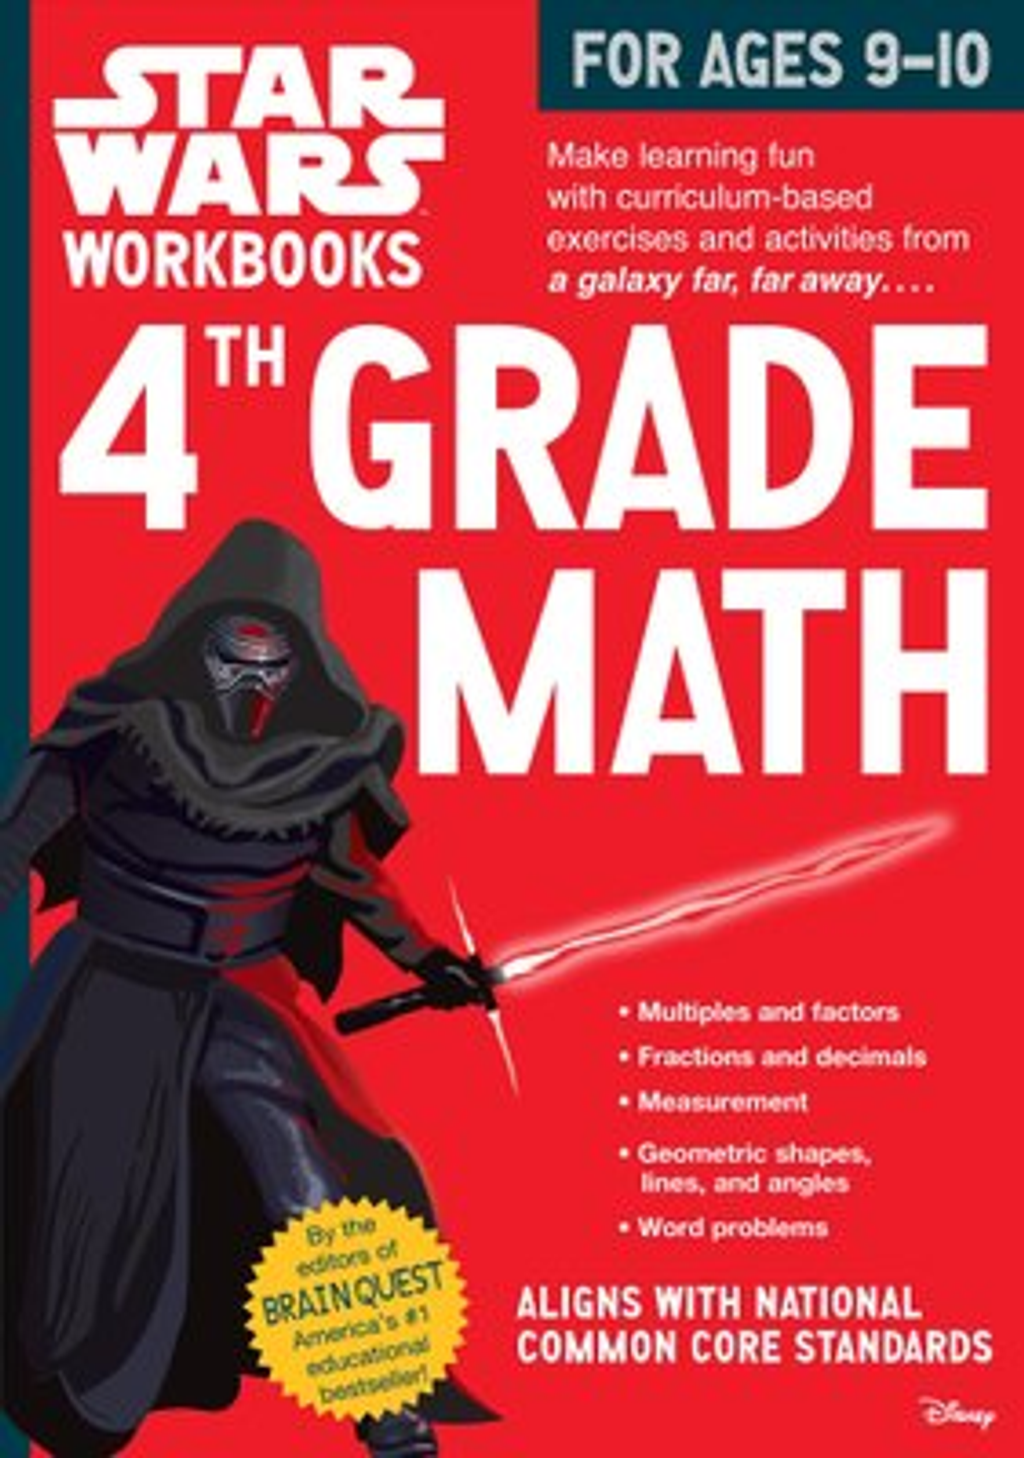 star wars workbooks 4th grade math-1